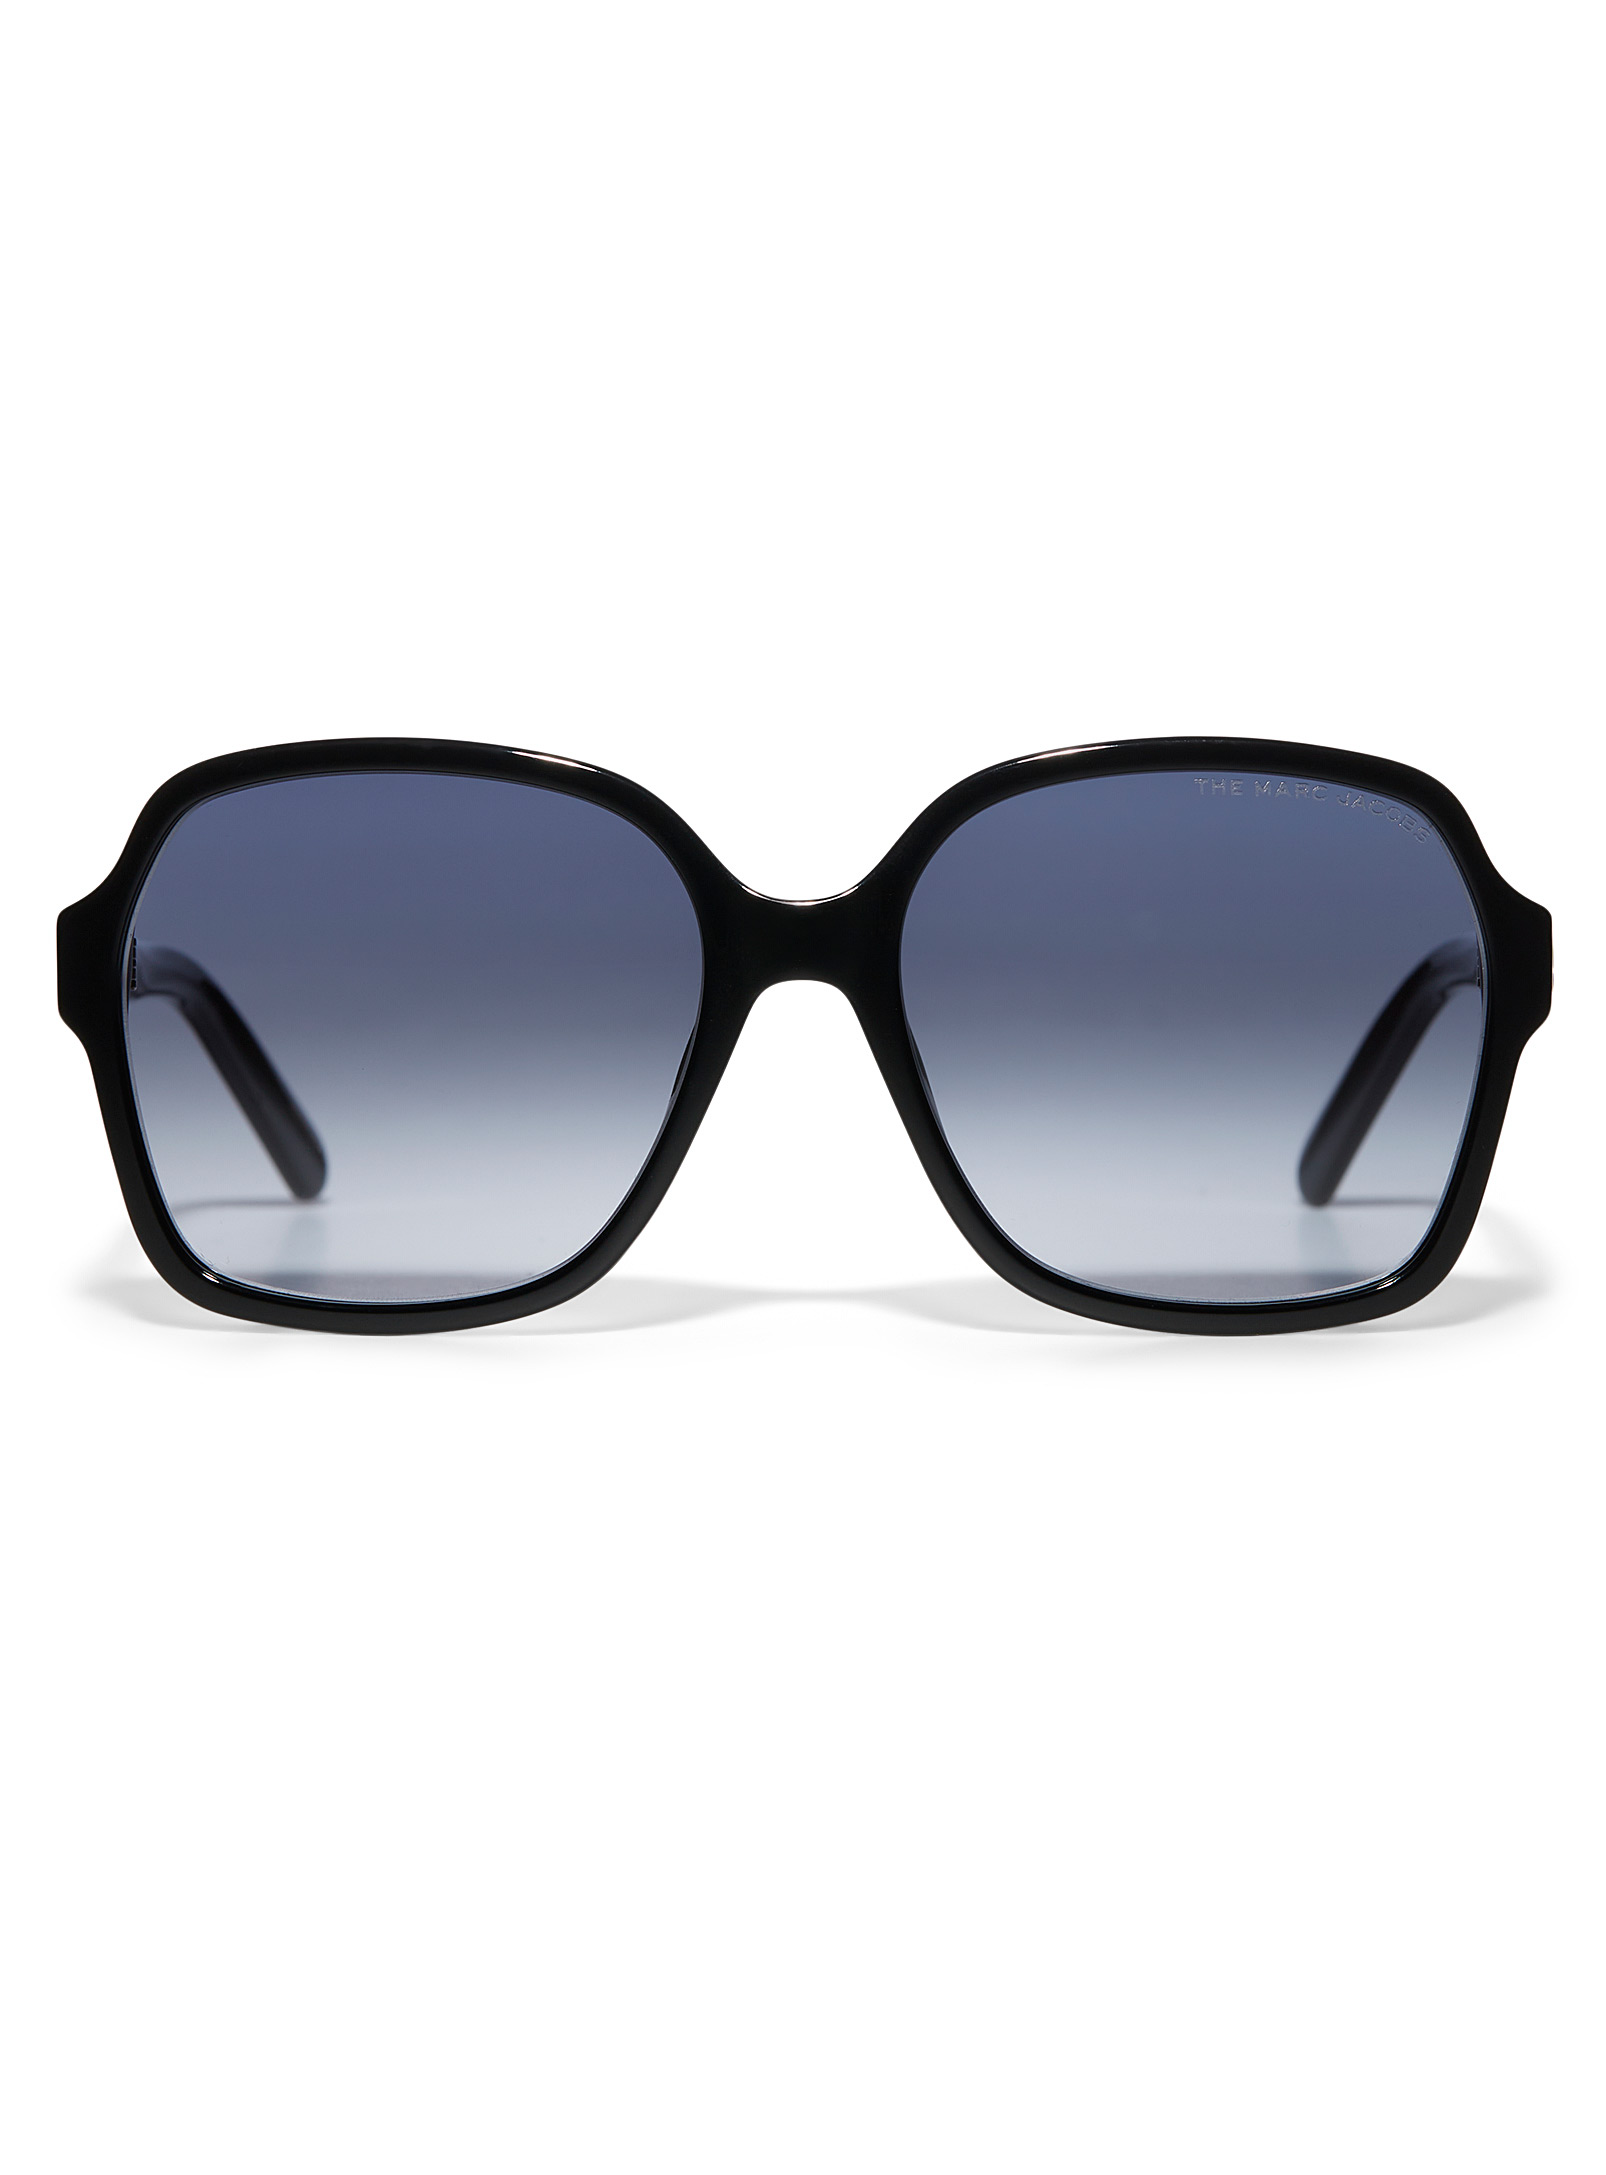 Marc Jacobs - Women's Gold-accent square sunglasses